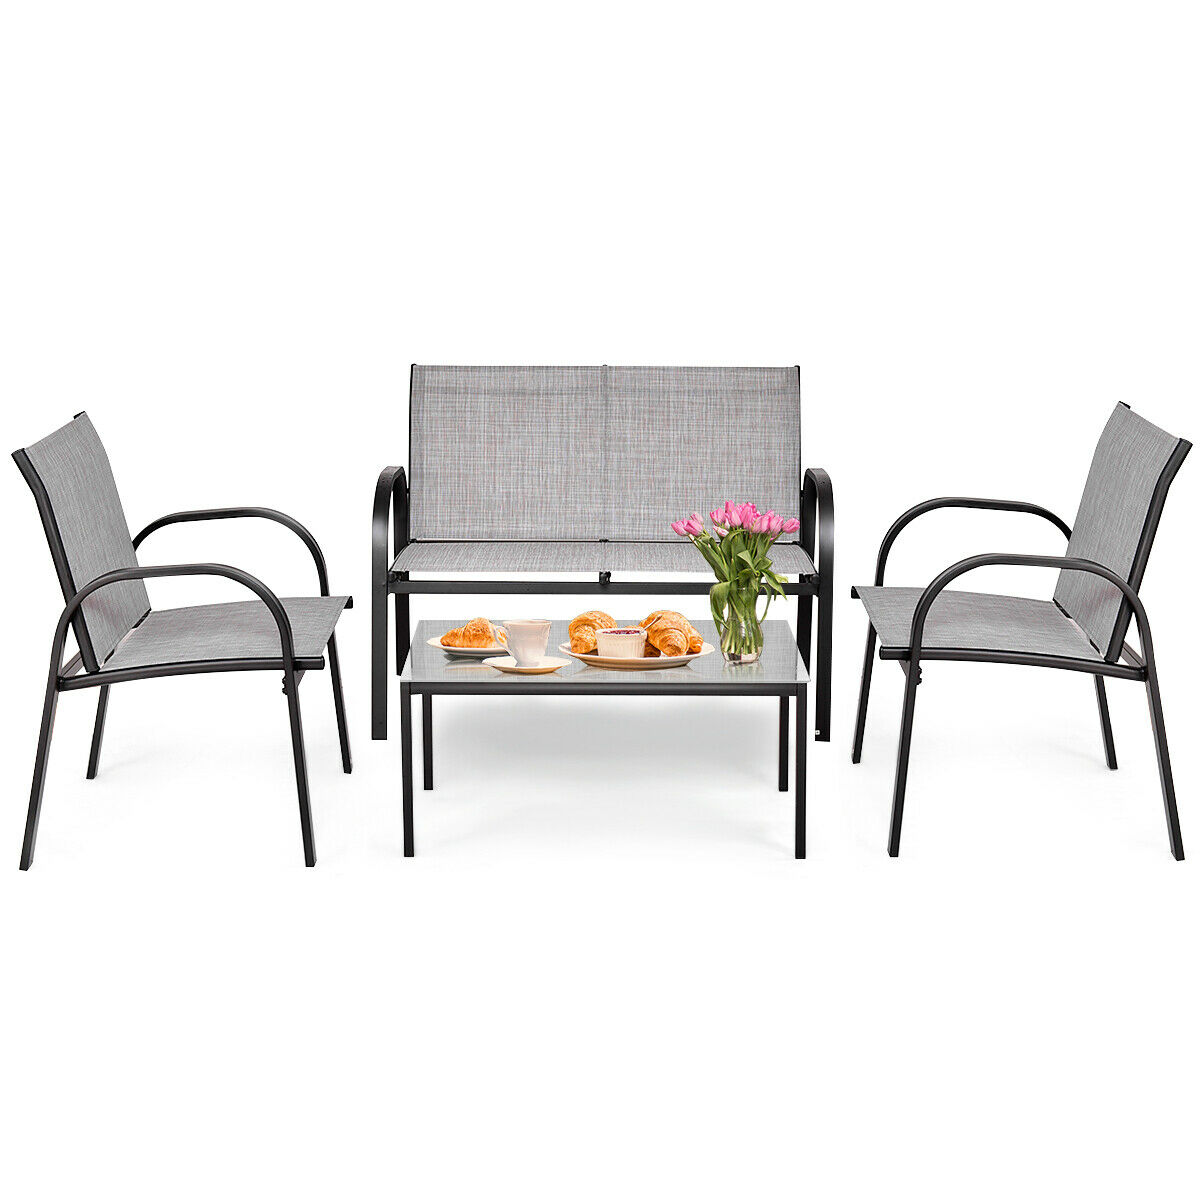 Costway 4 PCS Patio Furniture Set Sofa Coffee Table Steel Frame Garden Deck Gray HW65848